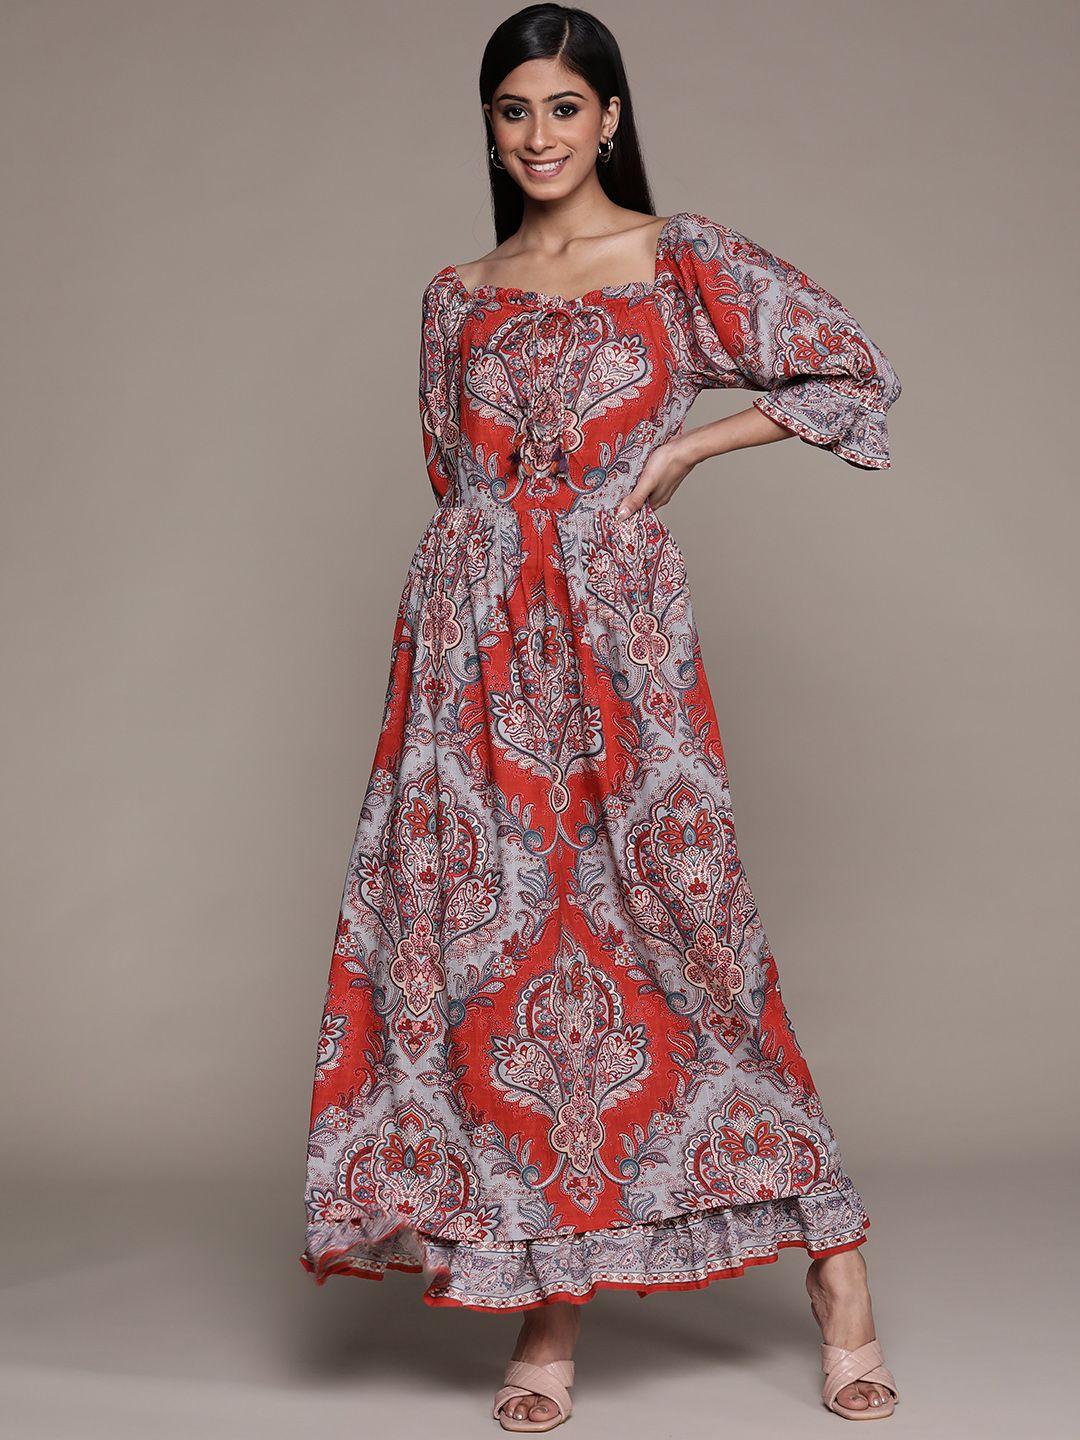 aarke ritu kumar women rust red & blue ethnic motifs a-line maxi dress